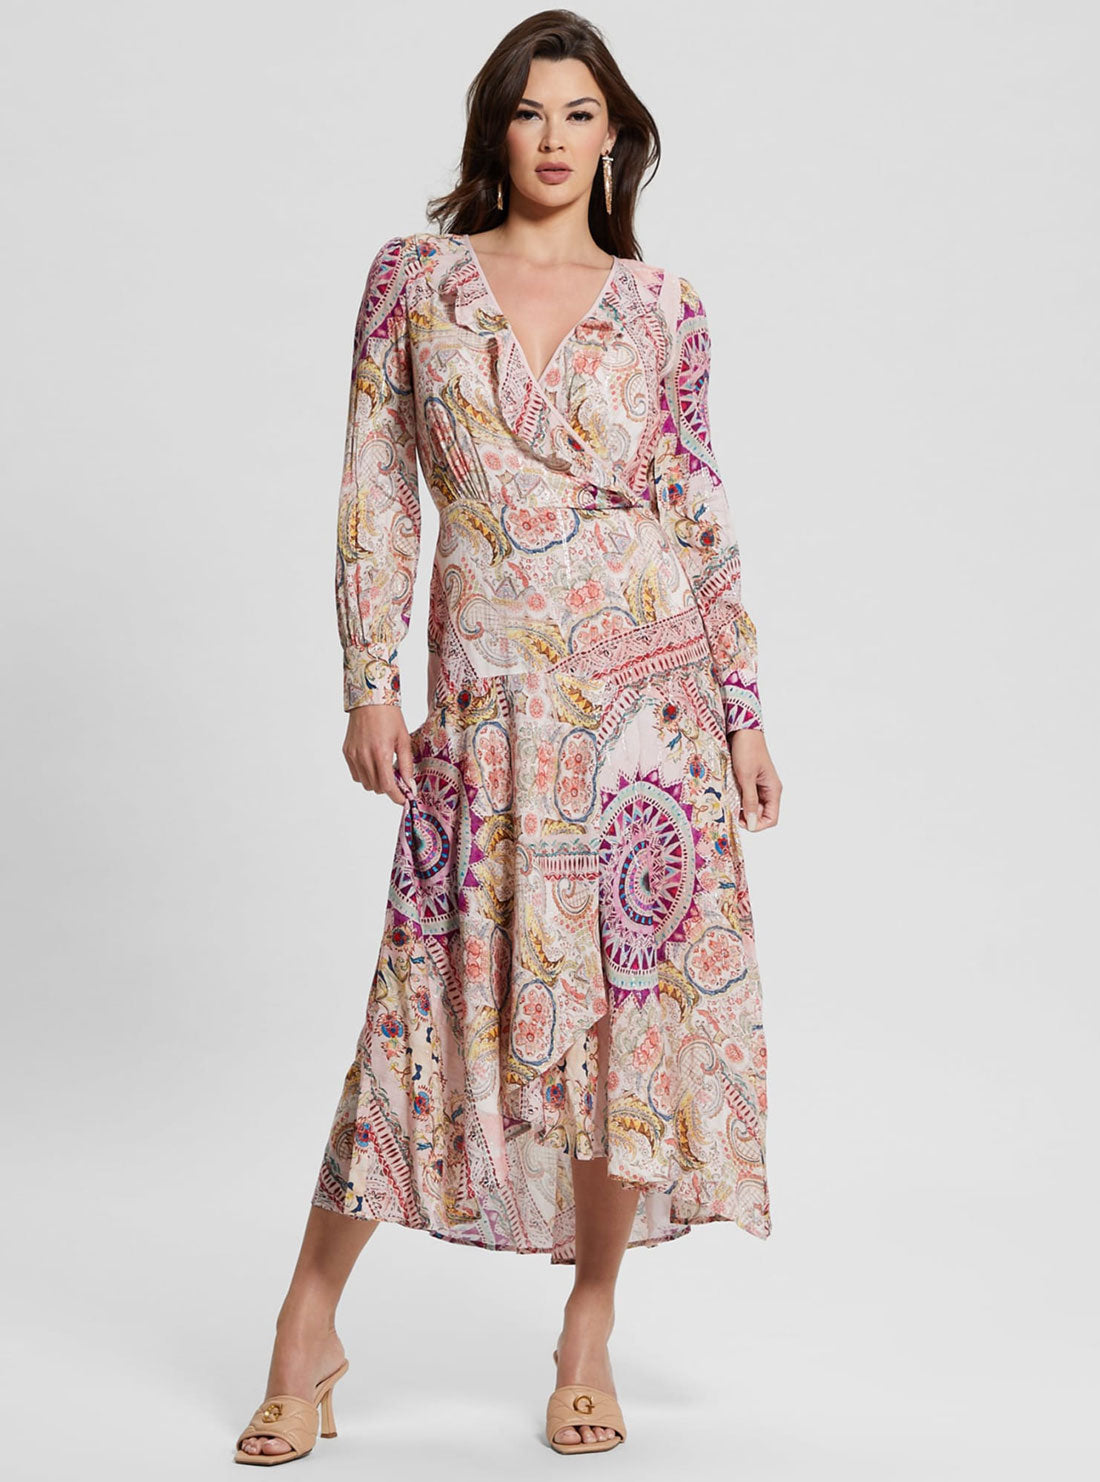 Monique Print Midi Dress | GUESS Women's Apparel | full view